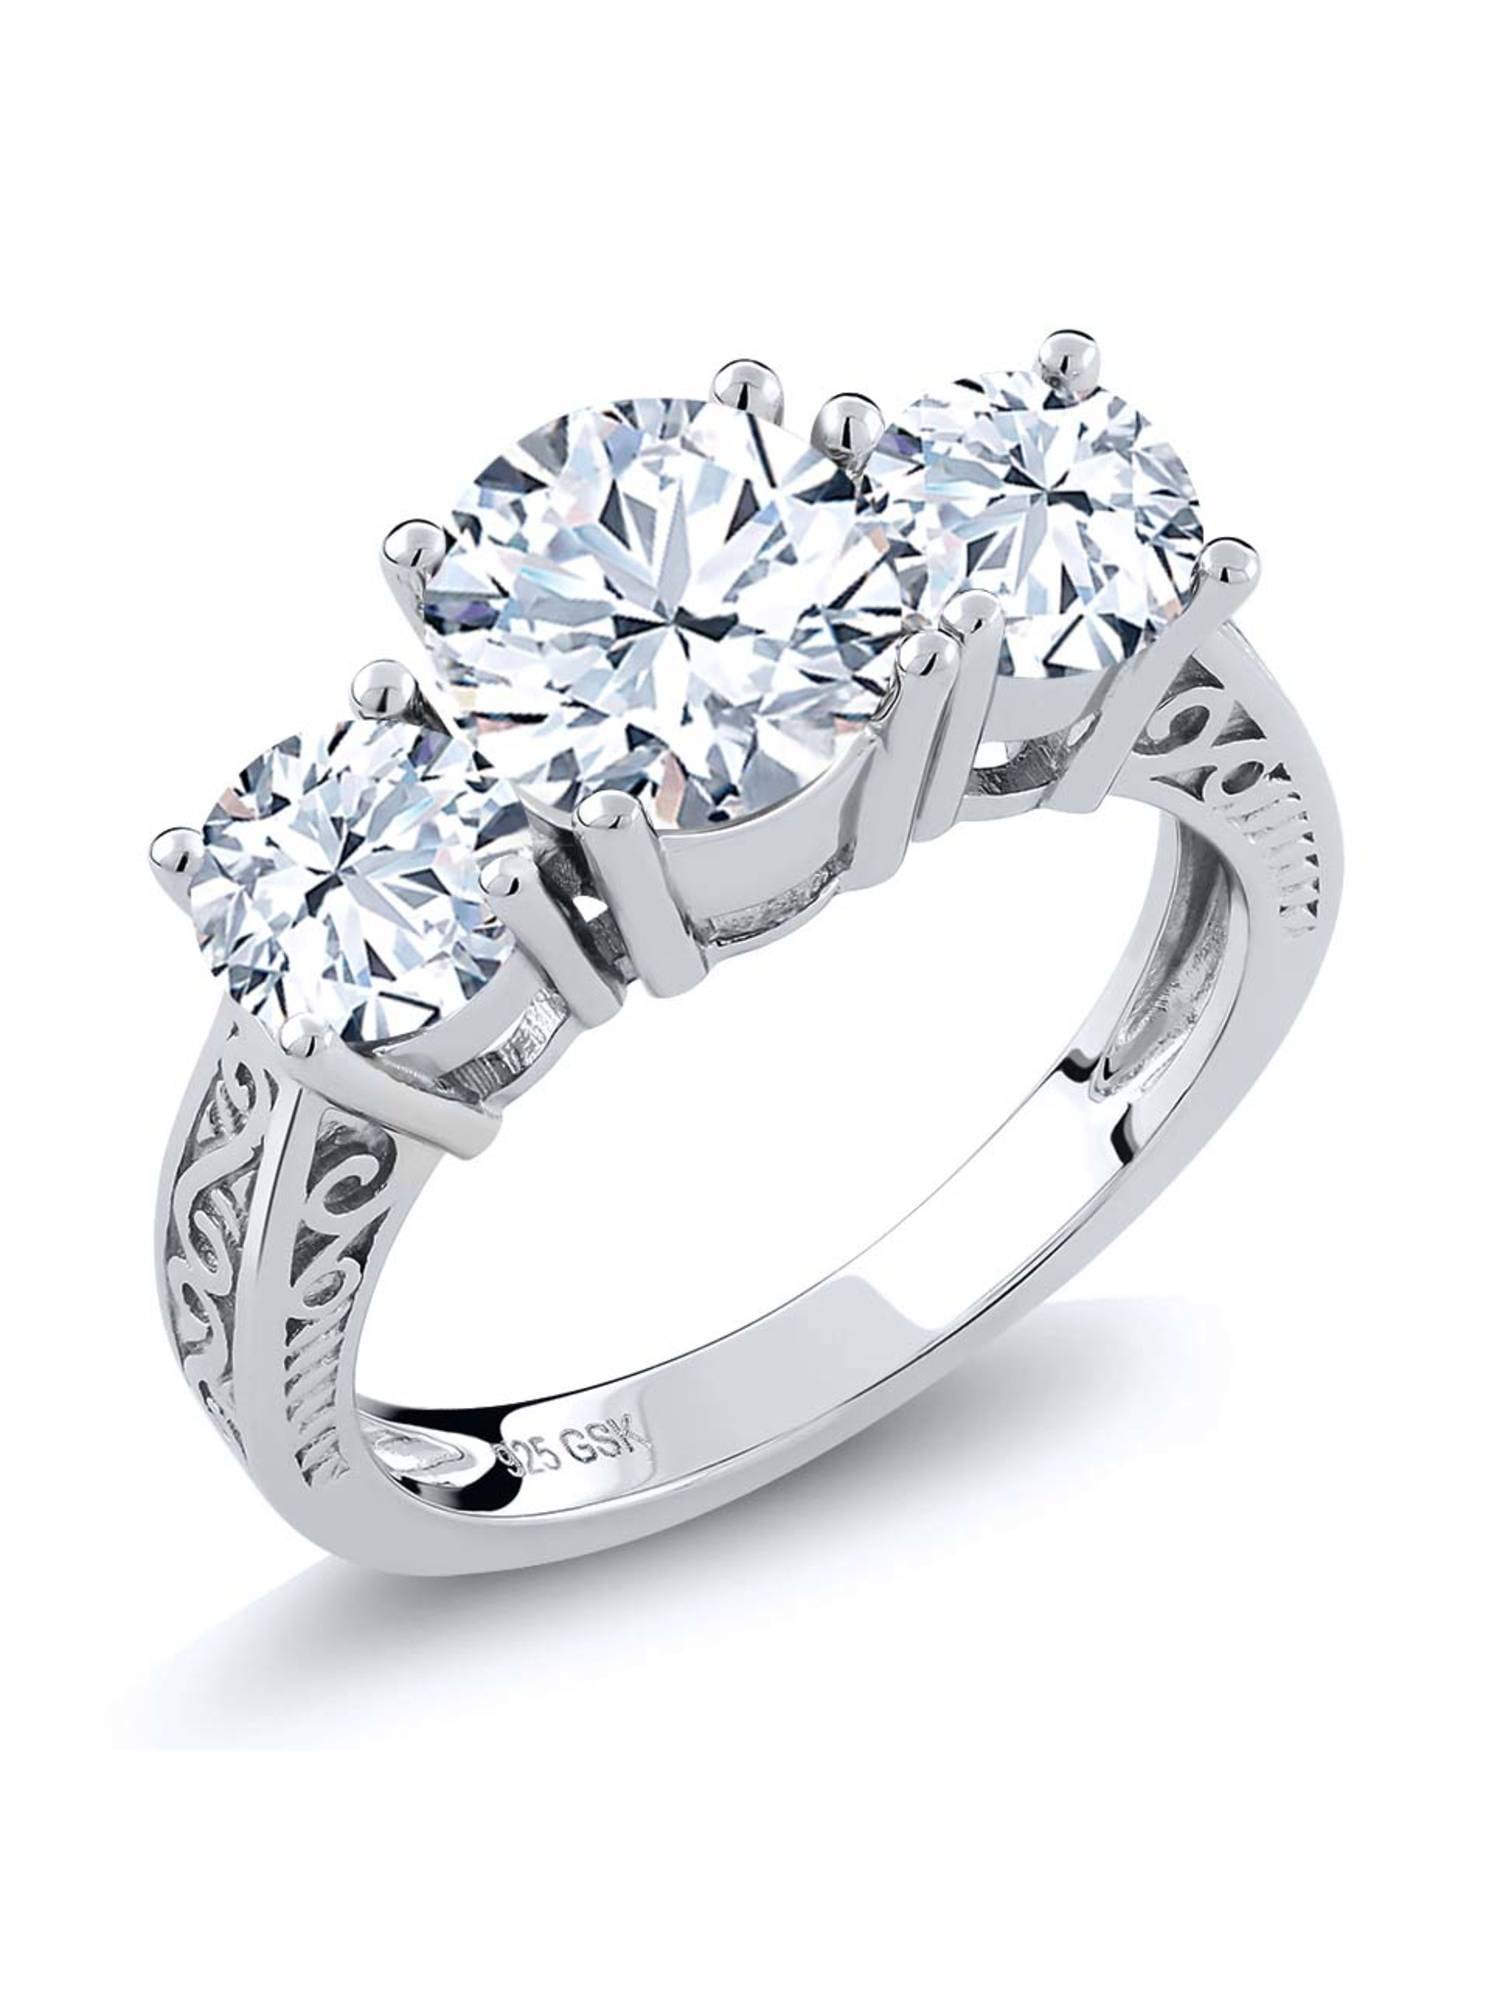 Women Men White Topaz Infinity 925 Silver Ring Jewelry Wedding Engagement Sz6-10 